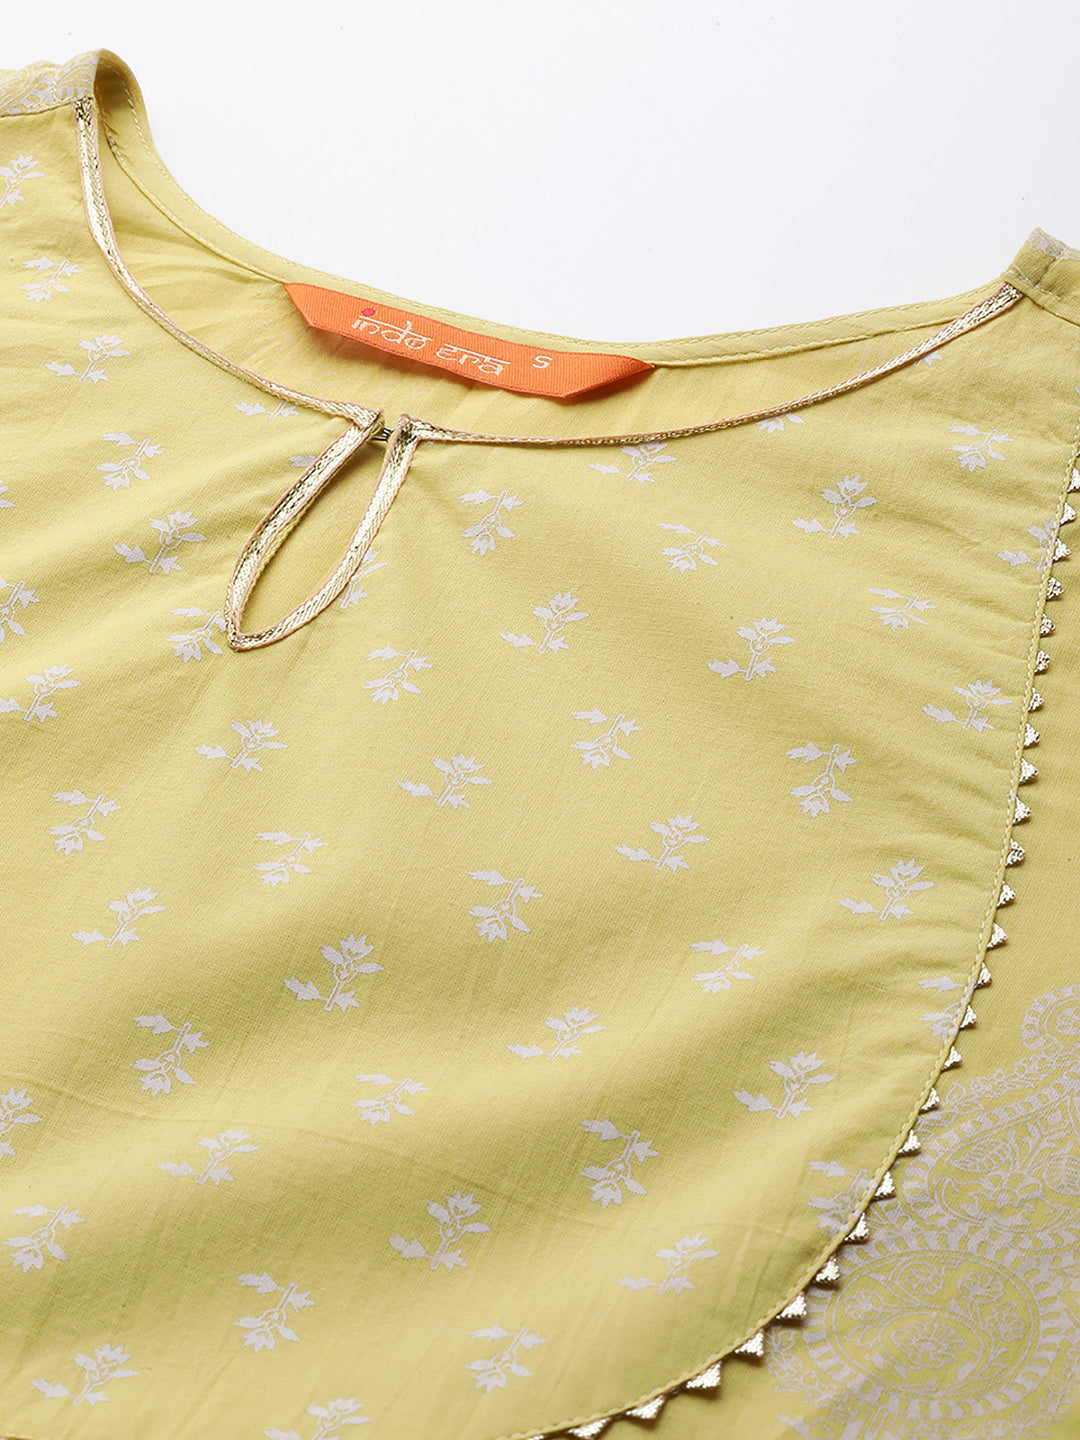 Women's Yellow Printed A-Line Kurta Trousers With Dupatta Set - Indo Era